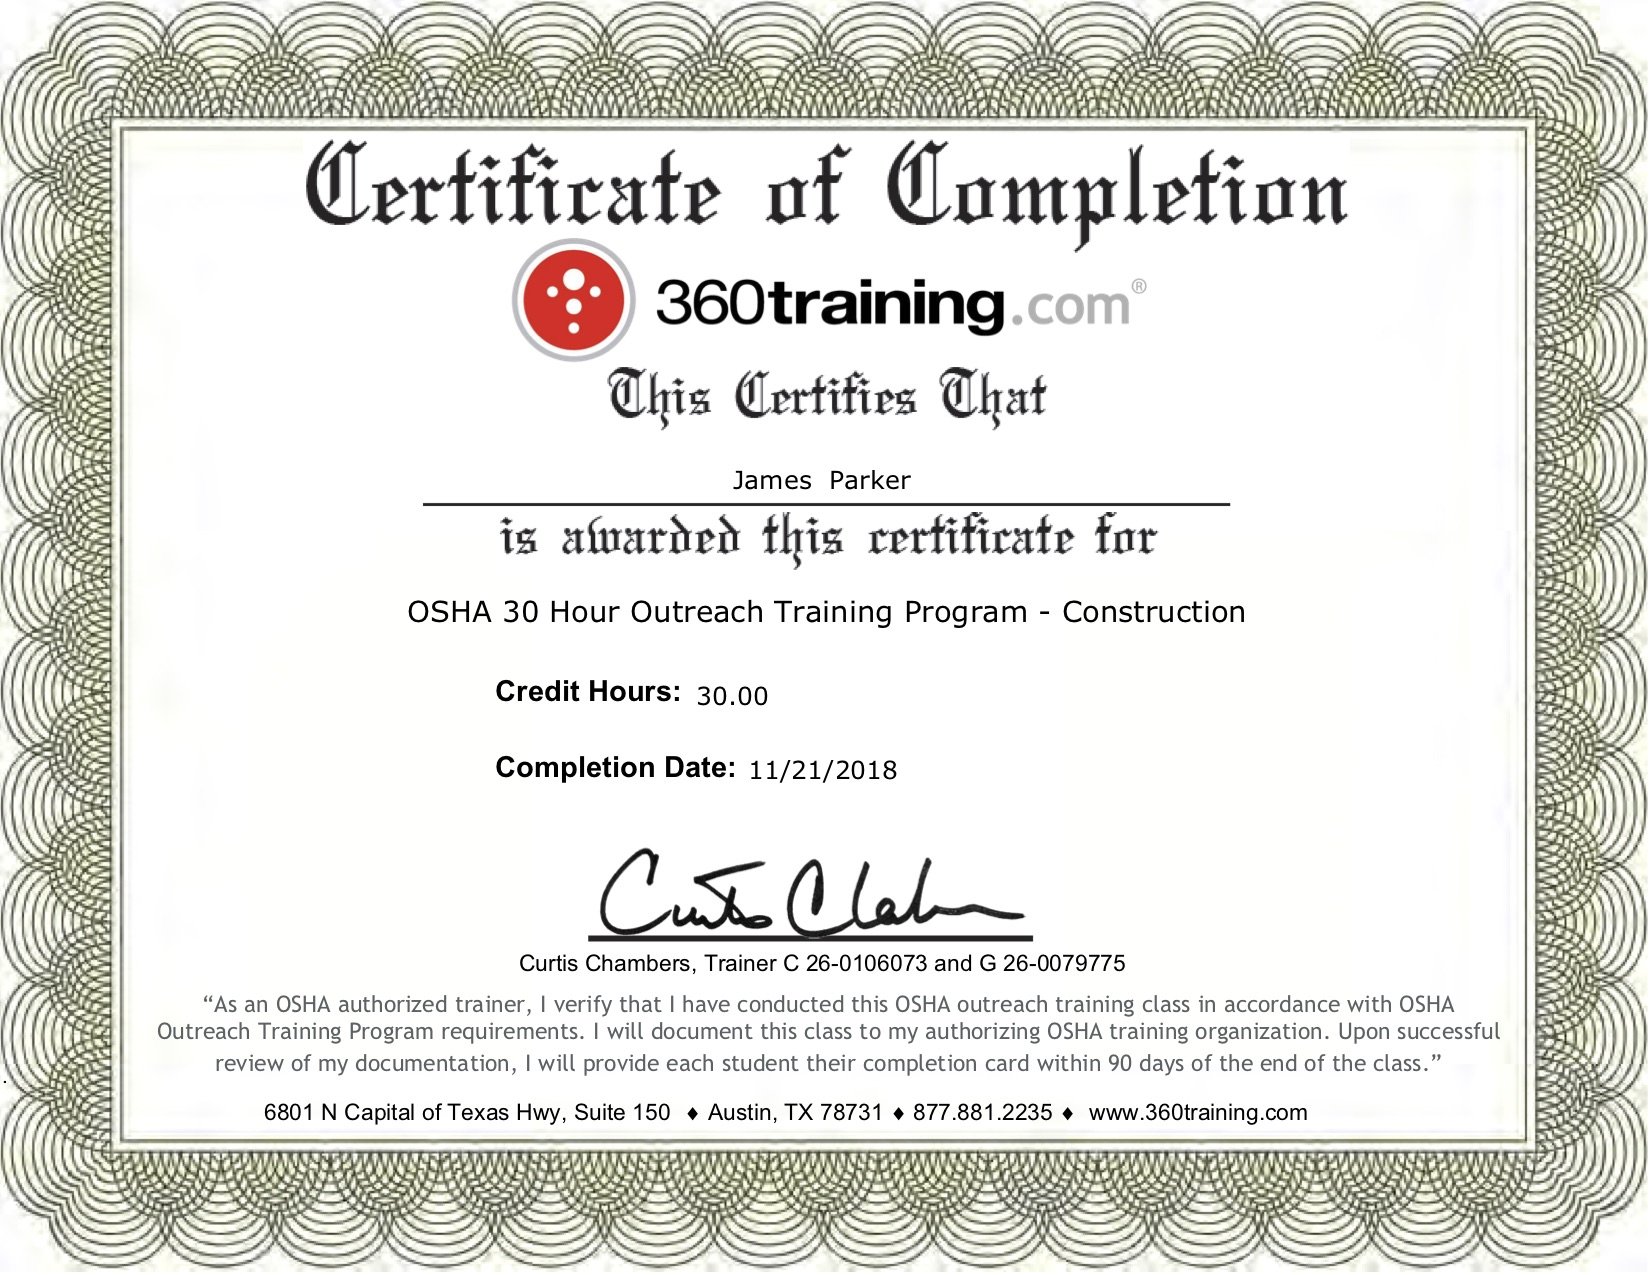 Osha Training Certificate | TUTORE.ORG - Master of Documents